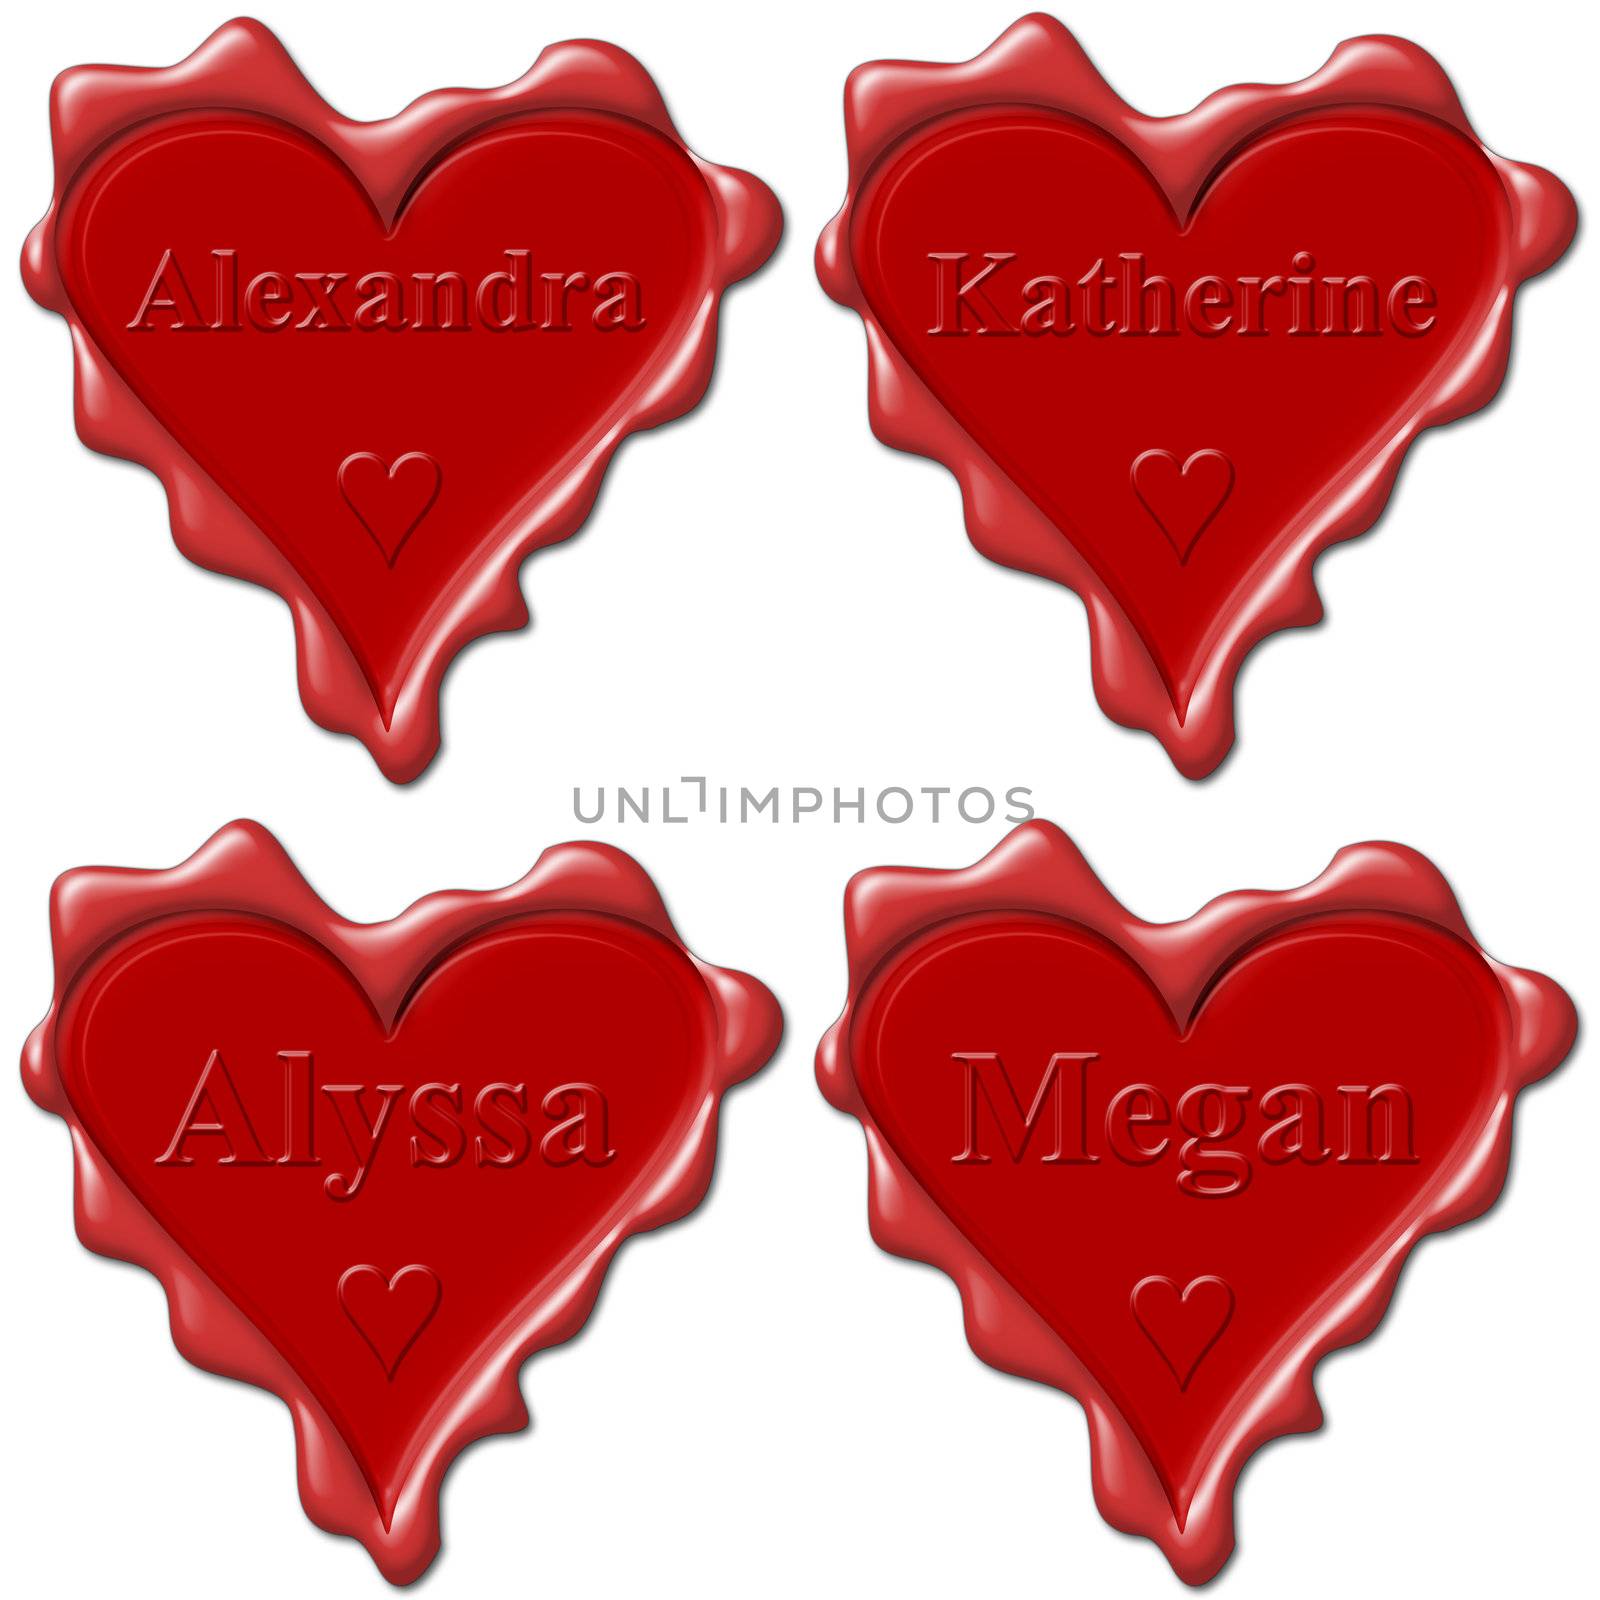 Valentine love hearts with names: Alexandra, Katherine, Alyssa,  by mozzyb